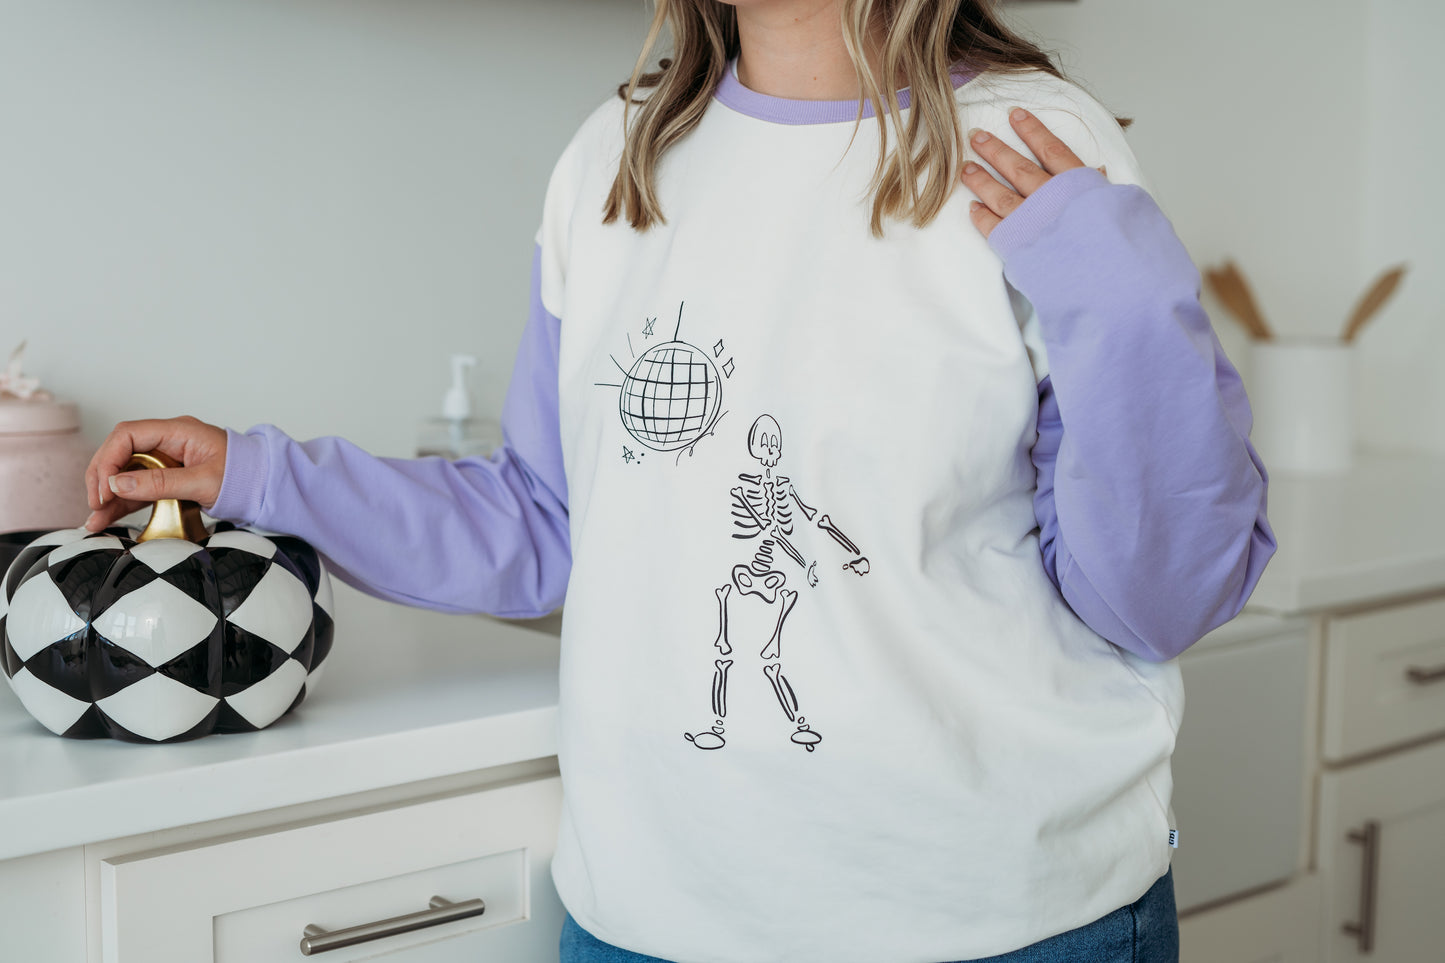 dancing skeleton sweatshirt